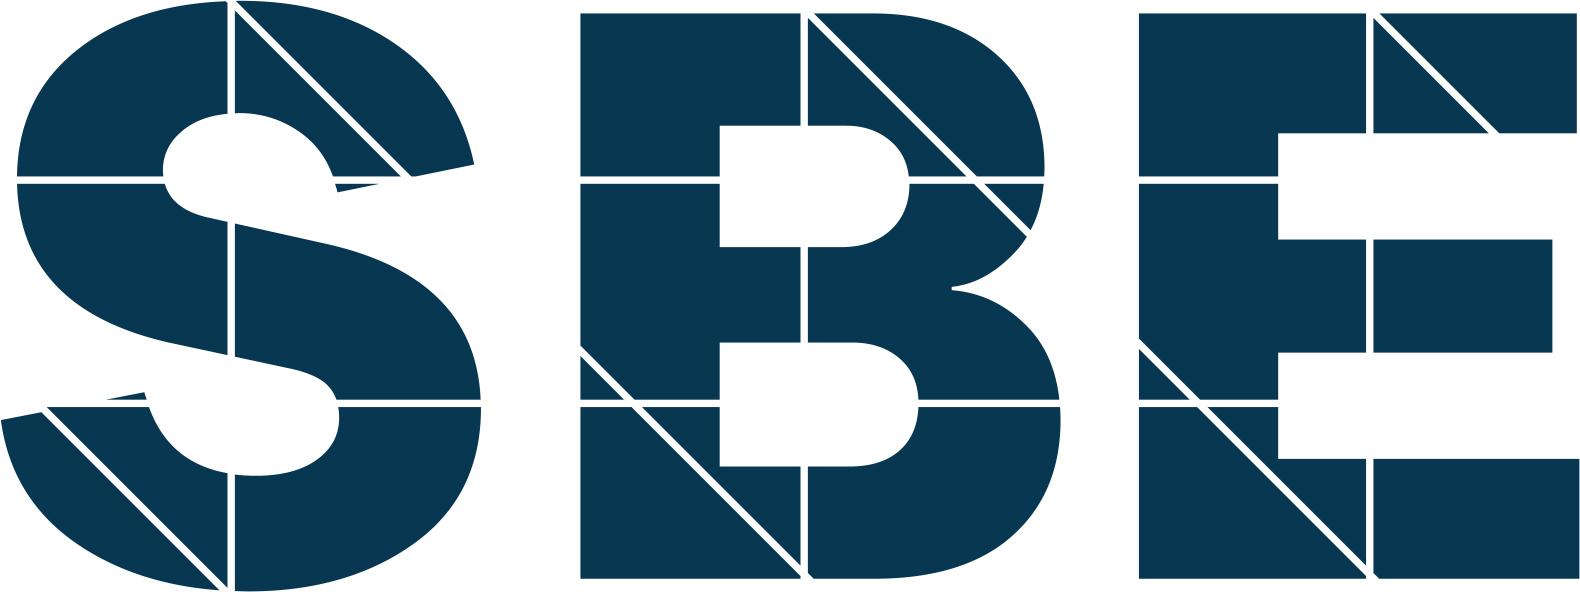 SBE logo rgb